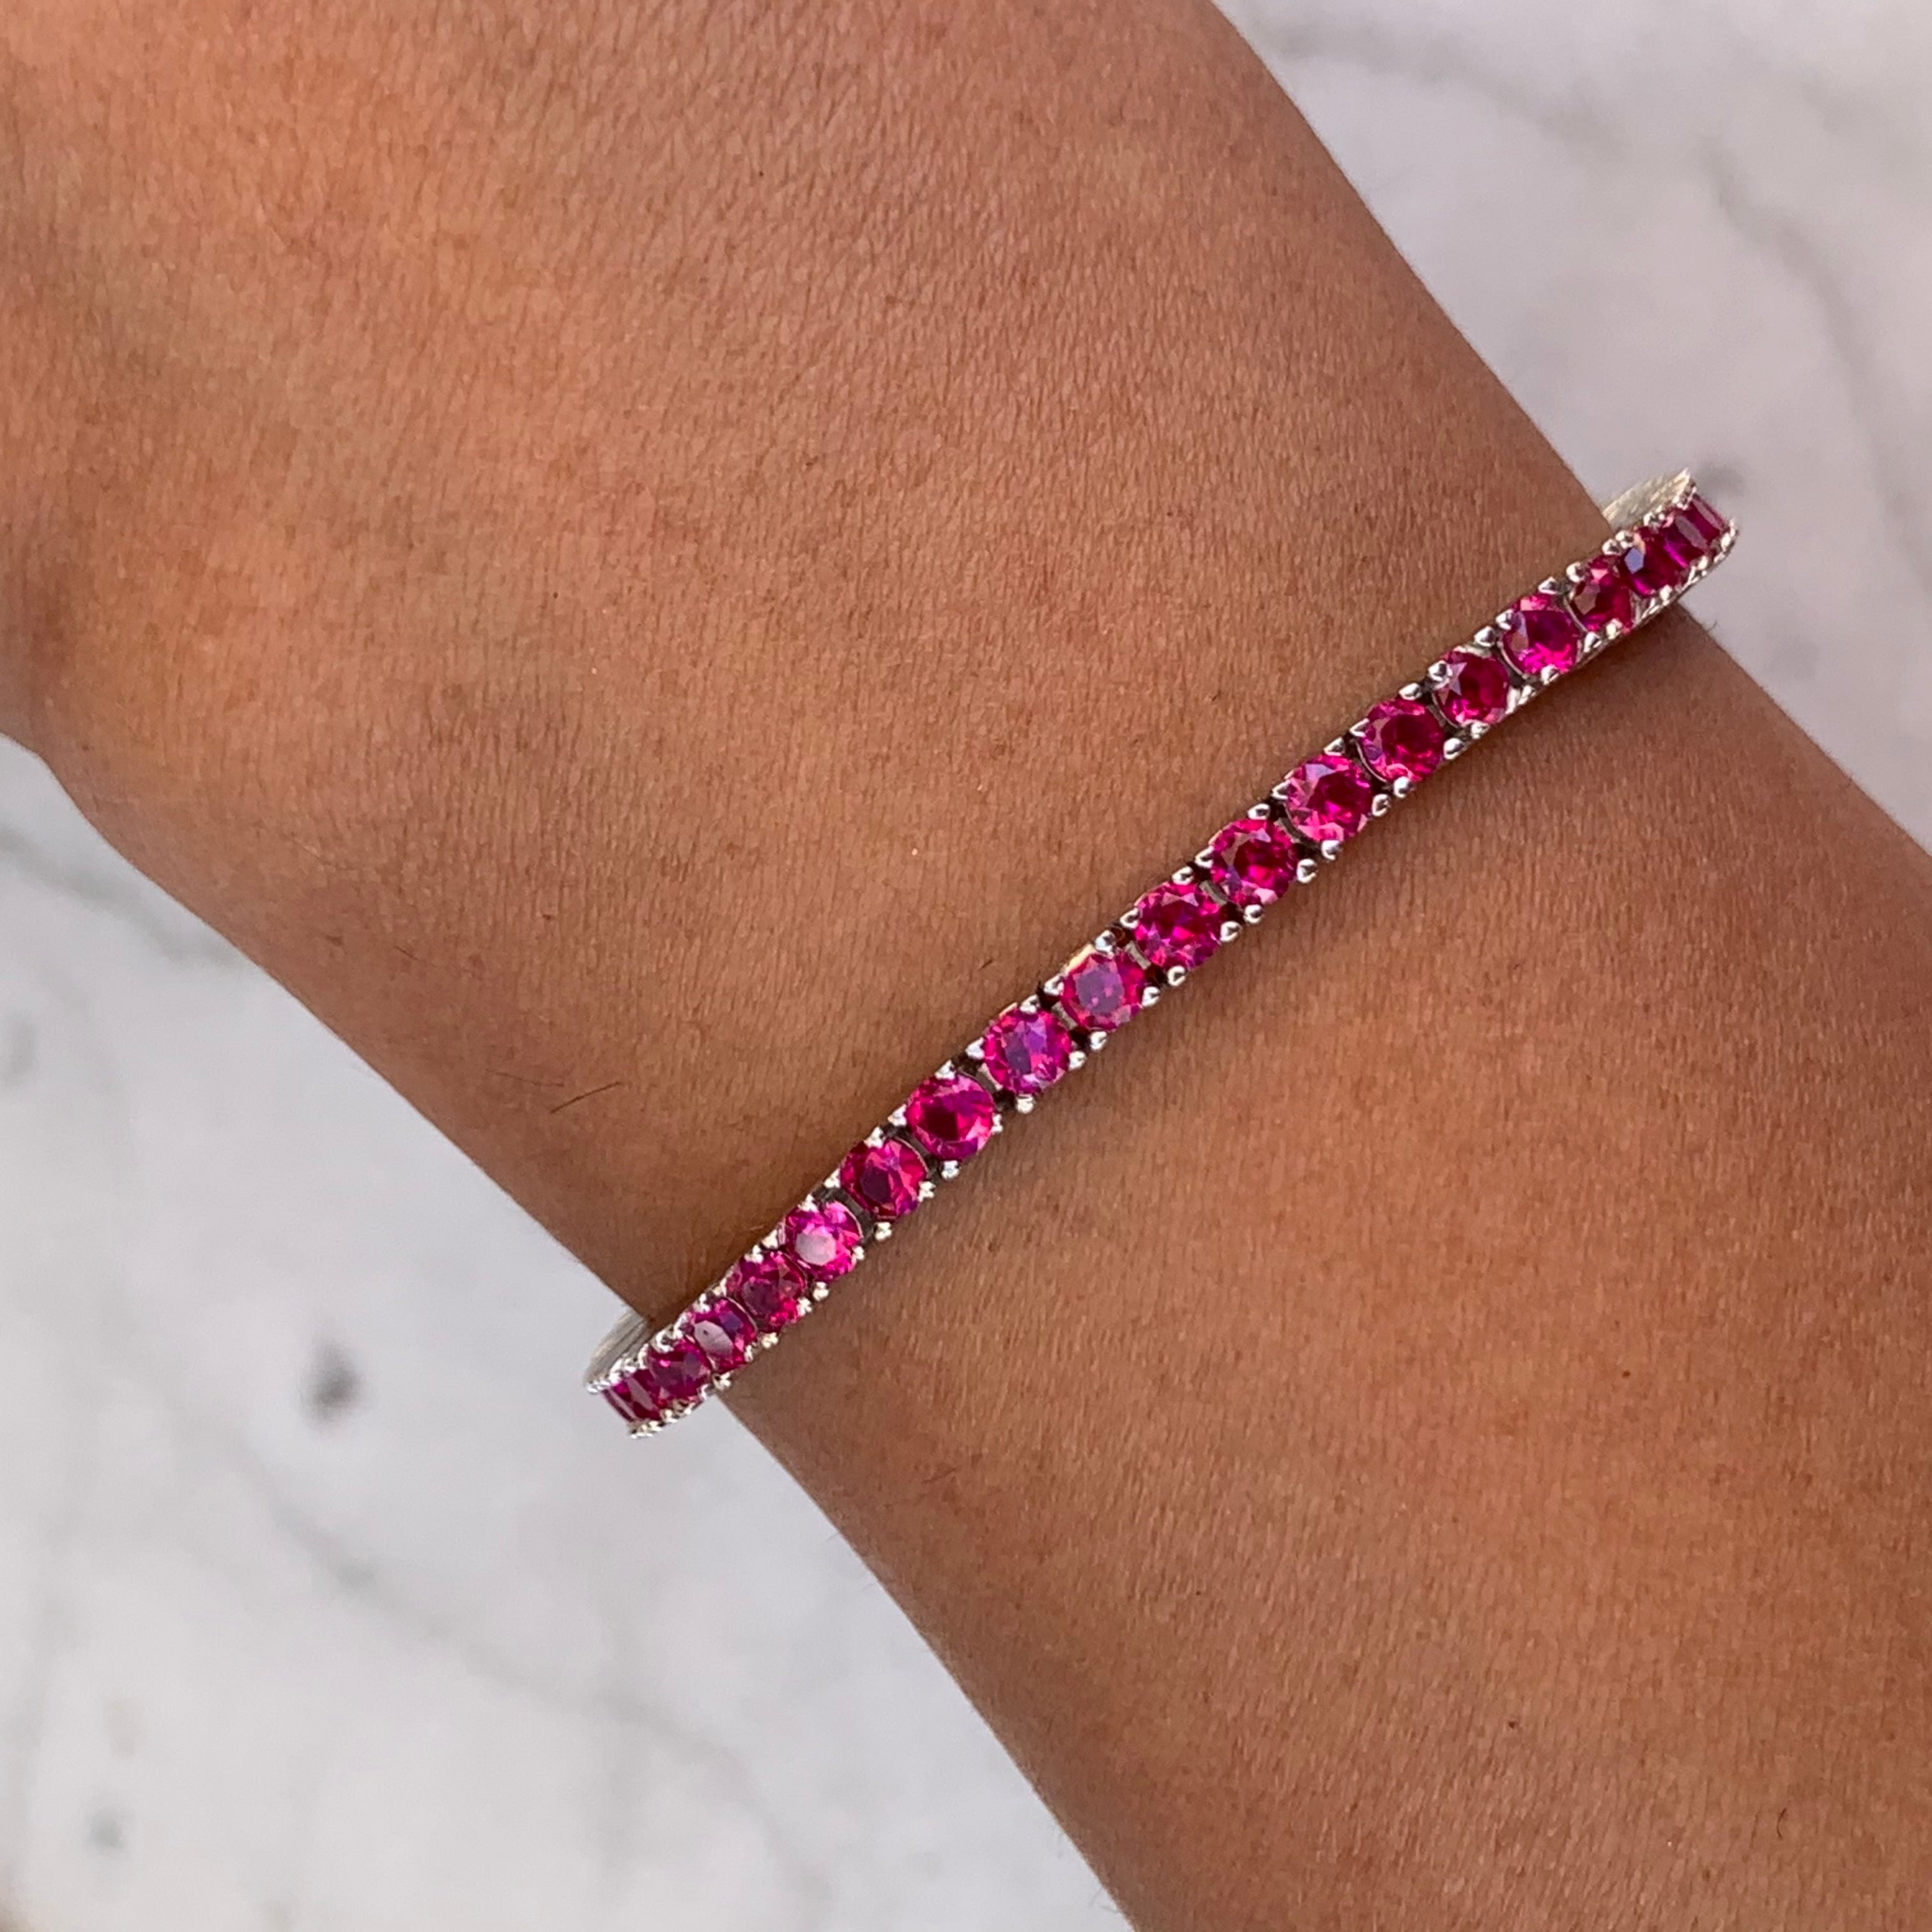 Sterling silver ruby pink tennis bracelet